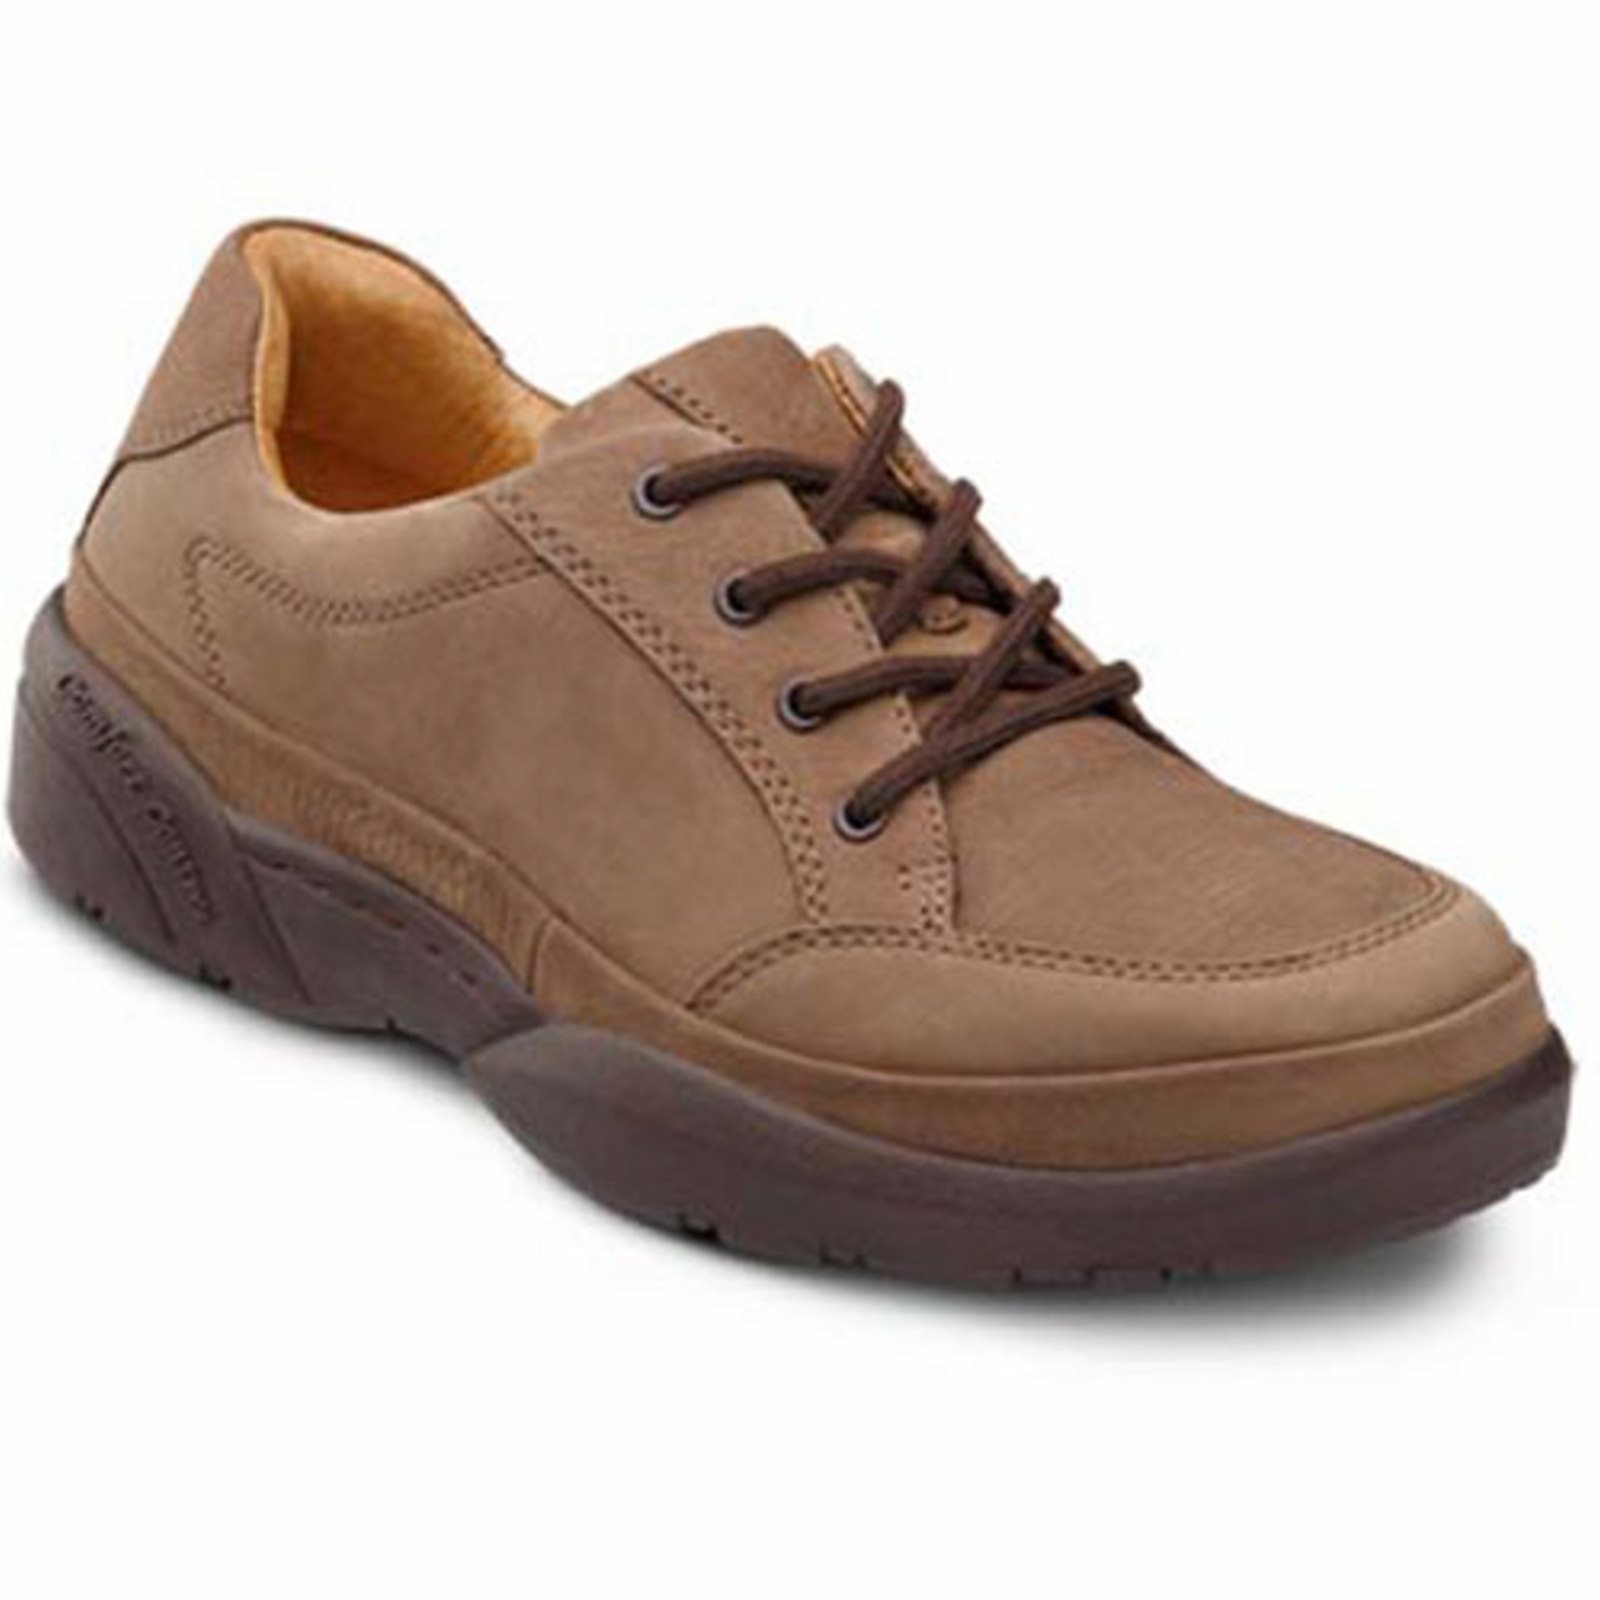 Dr. Comfort Justin Men's Casual Shoe: 9.5 Medium (B/D) Chestnut Suede Lace - image 1 of 4